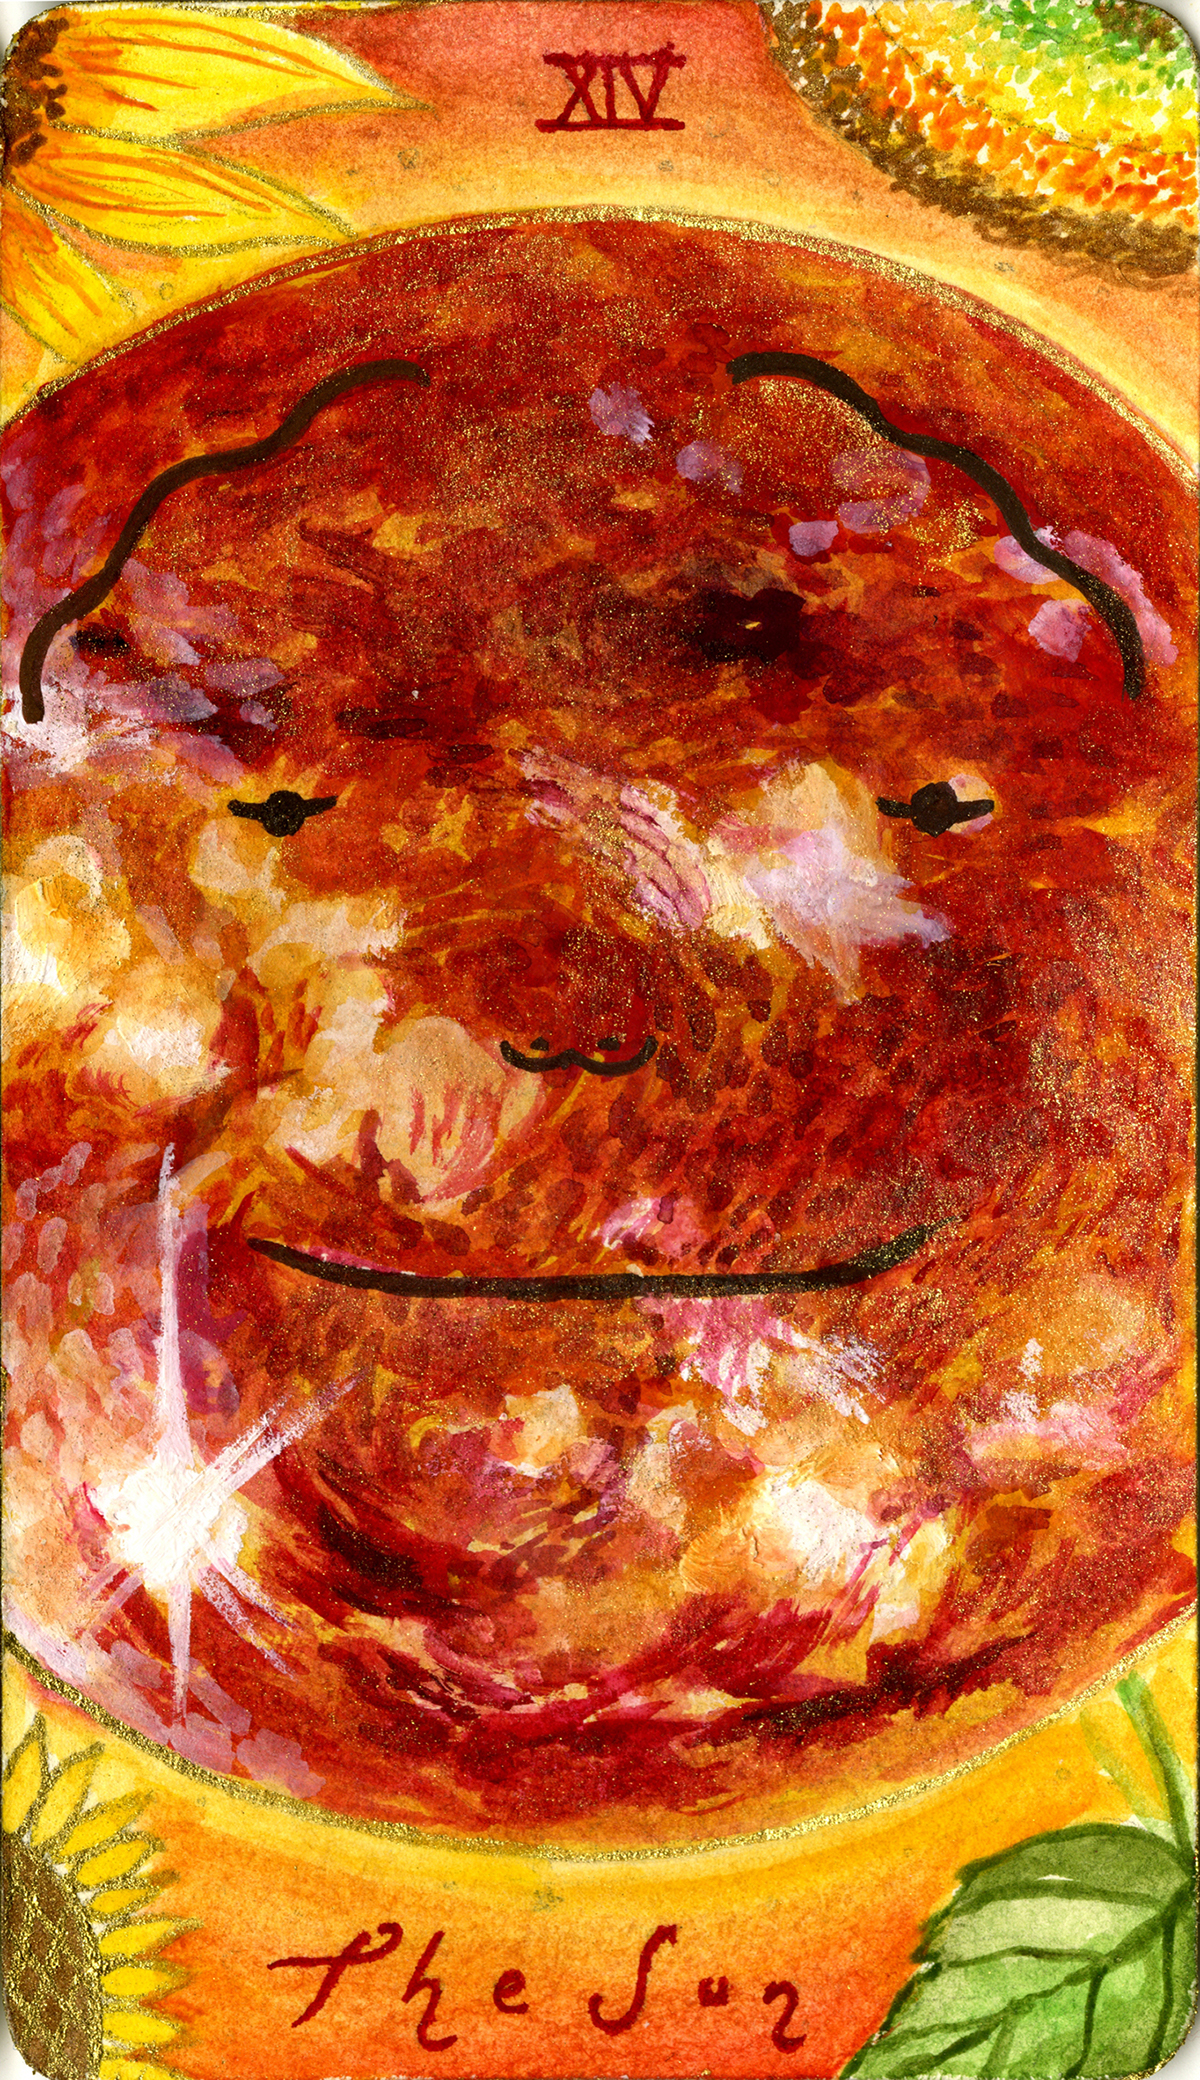 tarot card children's book illustration planet star Comet pattern religion